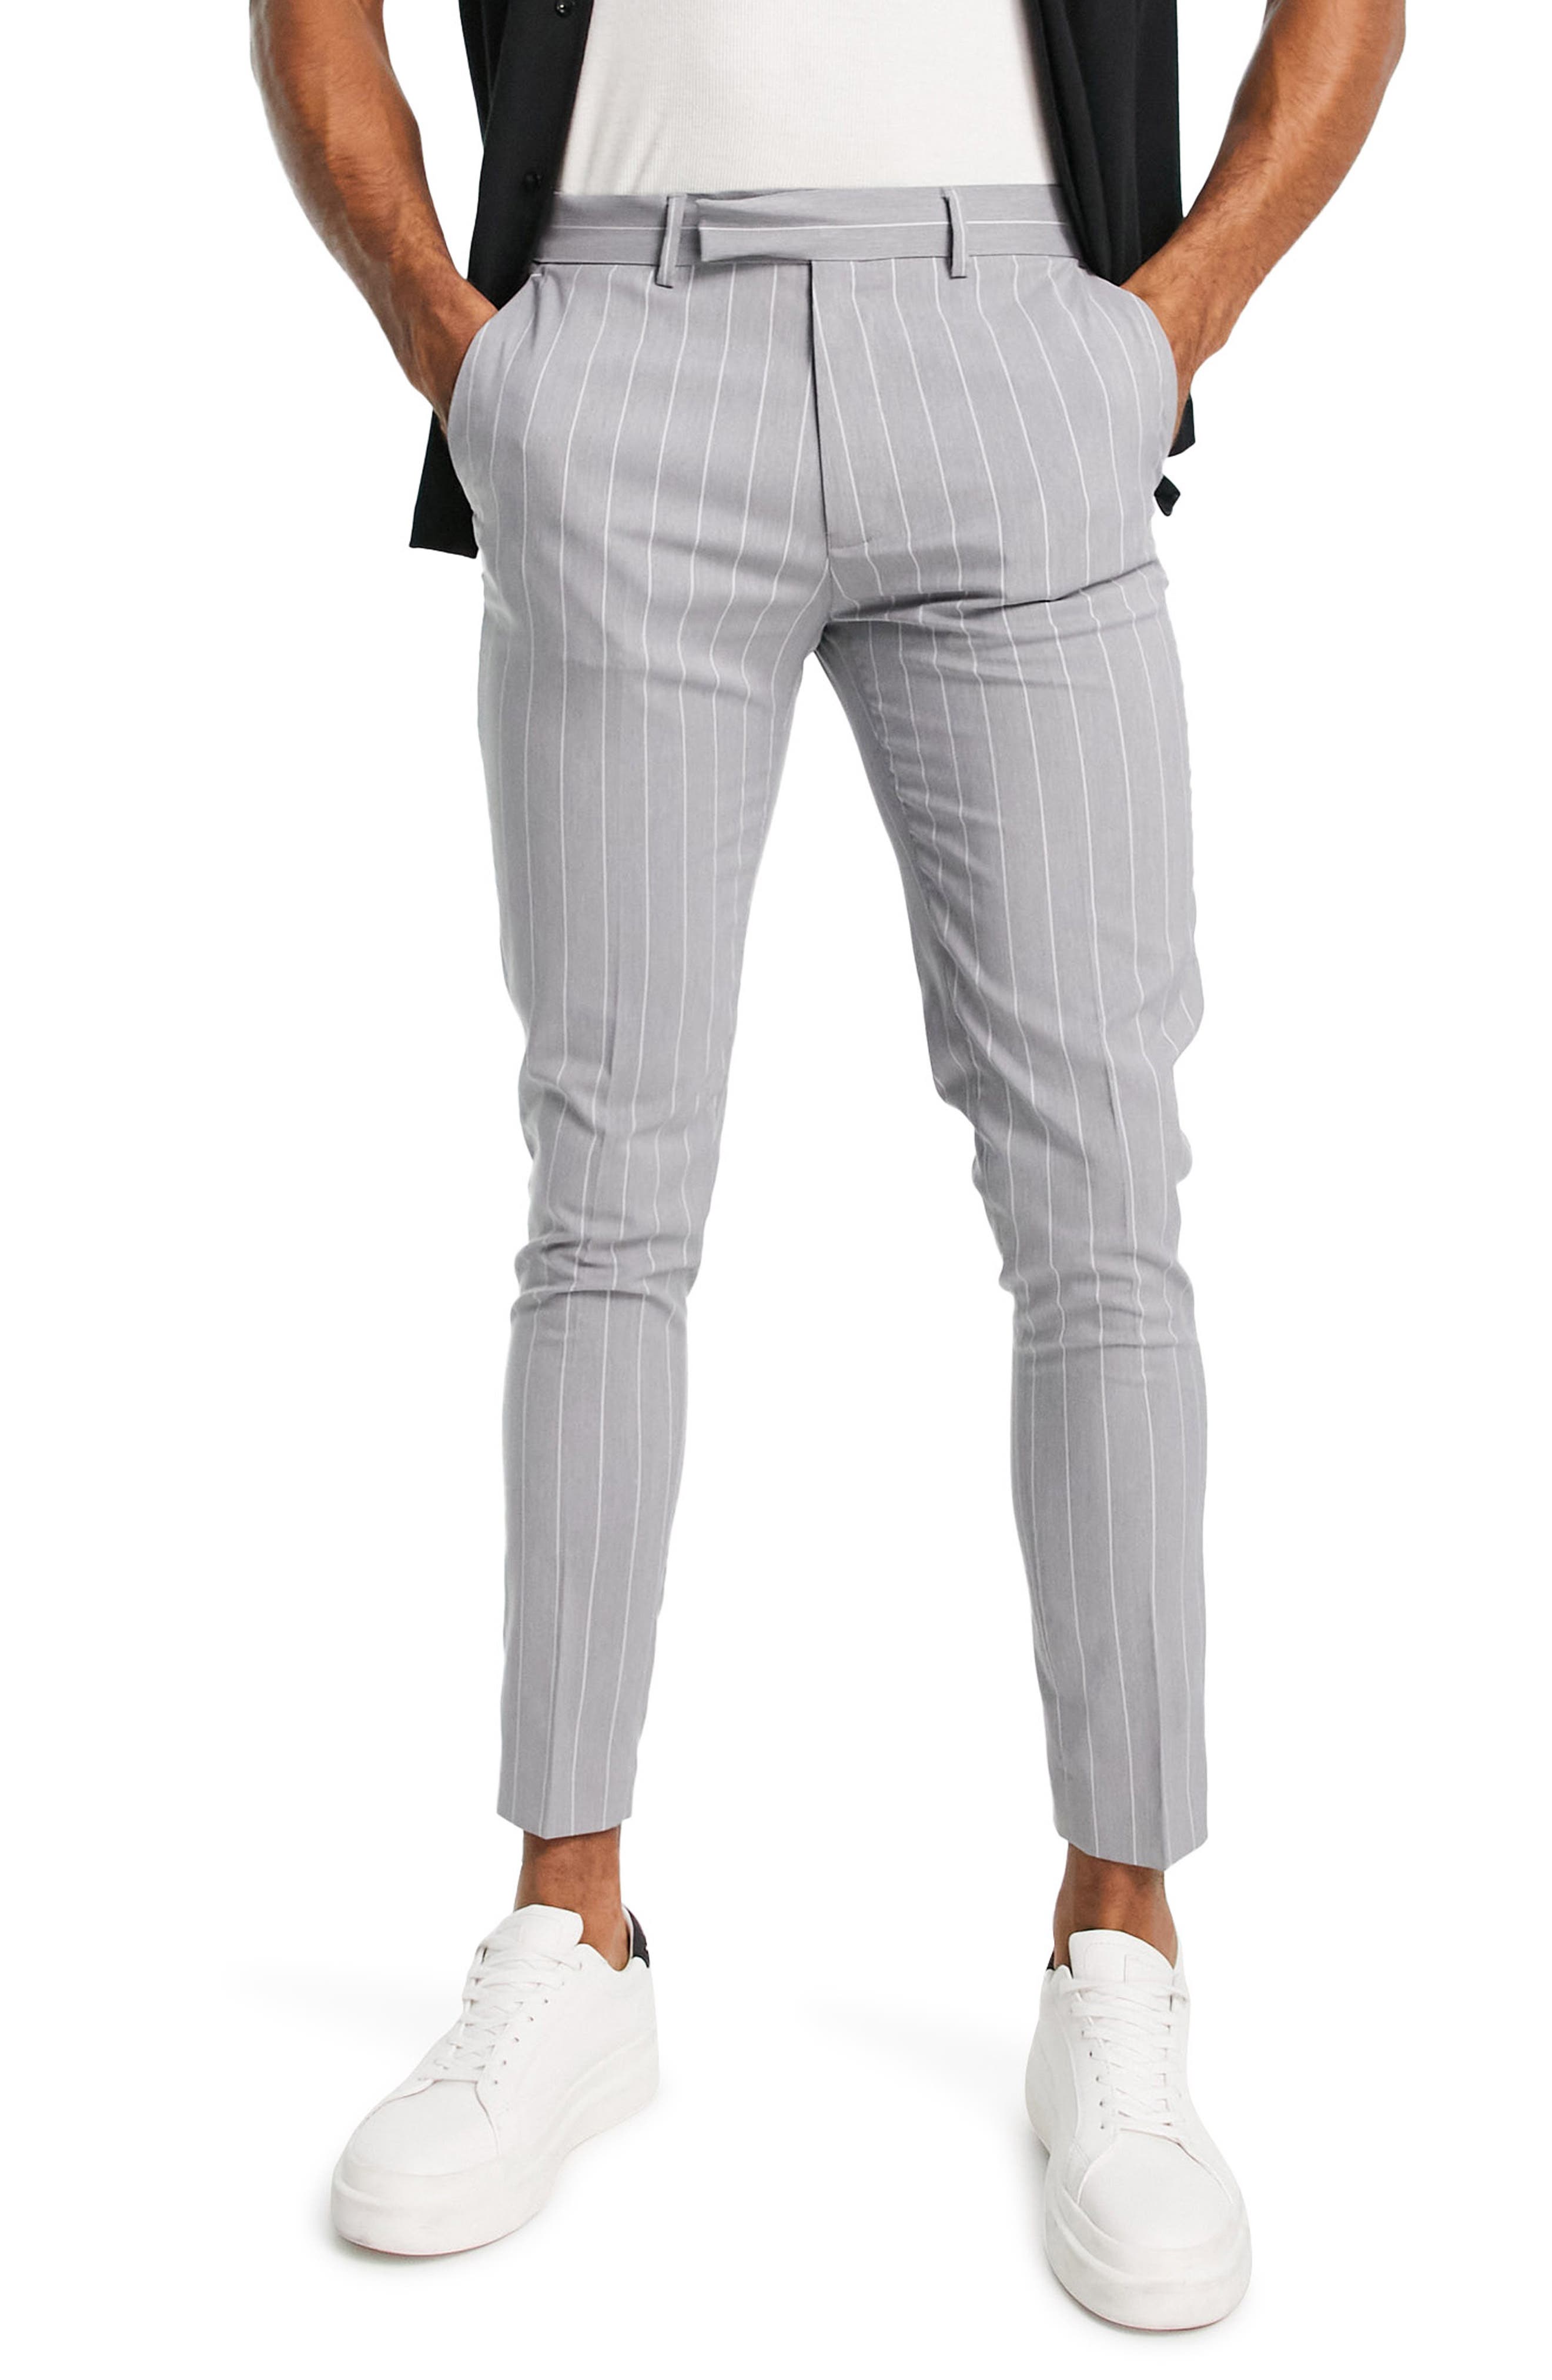 ASOS DESIGN Stripe Smart Skinny Trousers in Grey